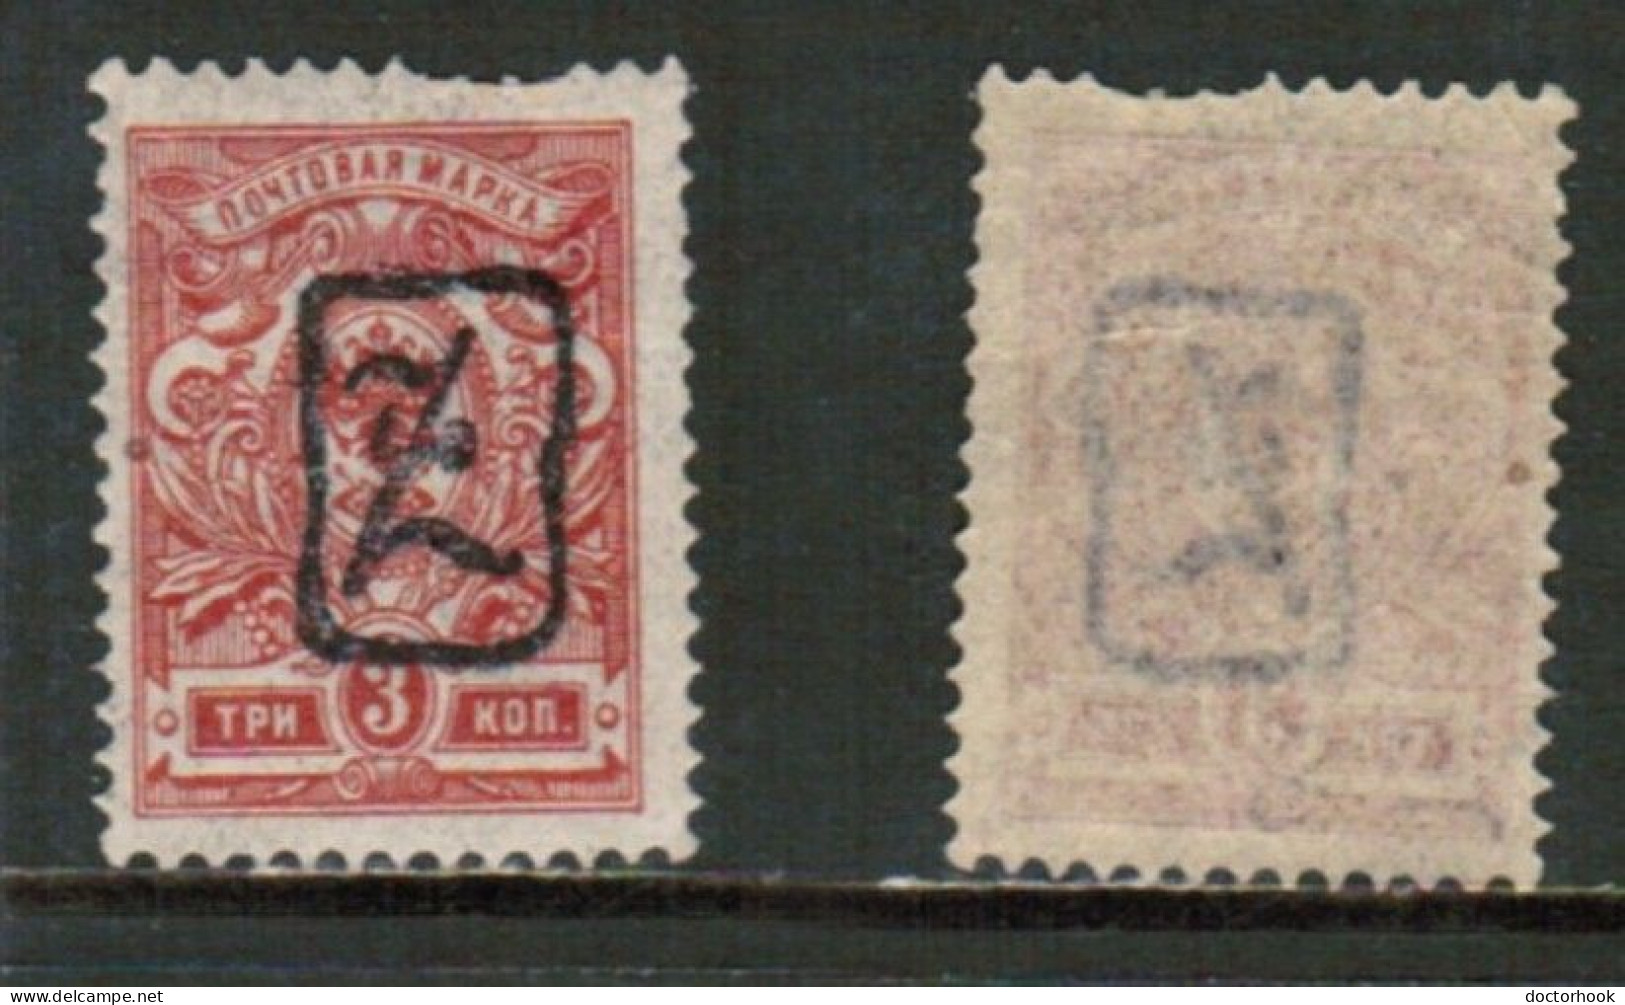 ARMANIA   Scott # 32a** MINT NH (CONDITION AS PER SCAN) (Stamp Scan # 920-7) - Arménie